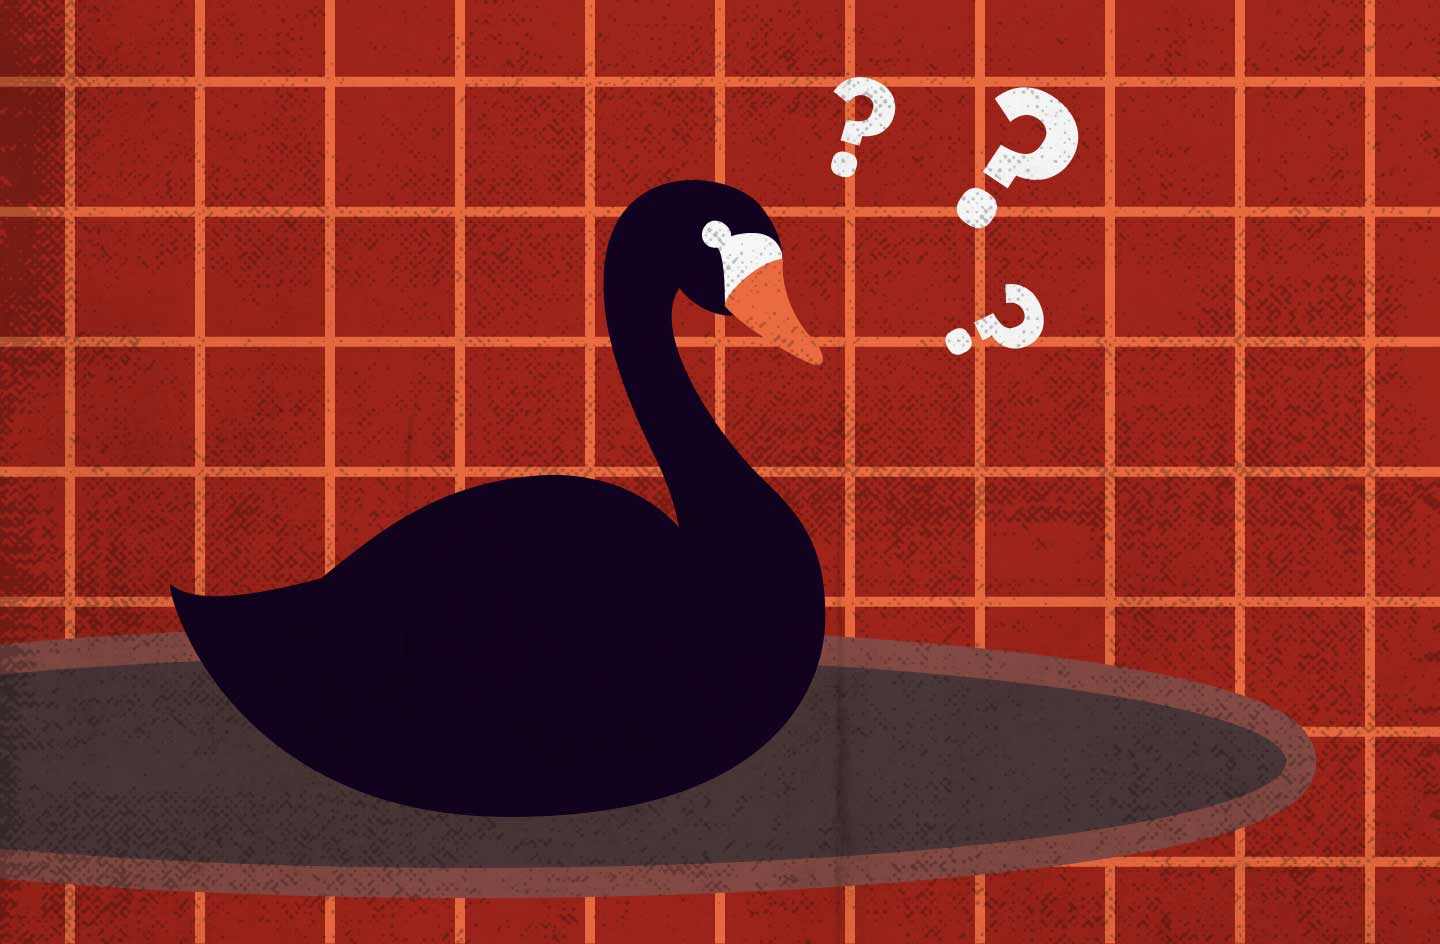 Black Swan Theory